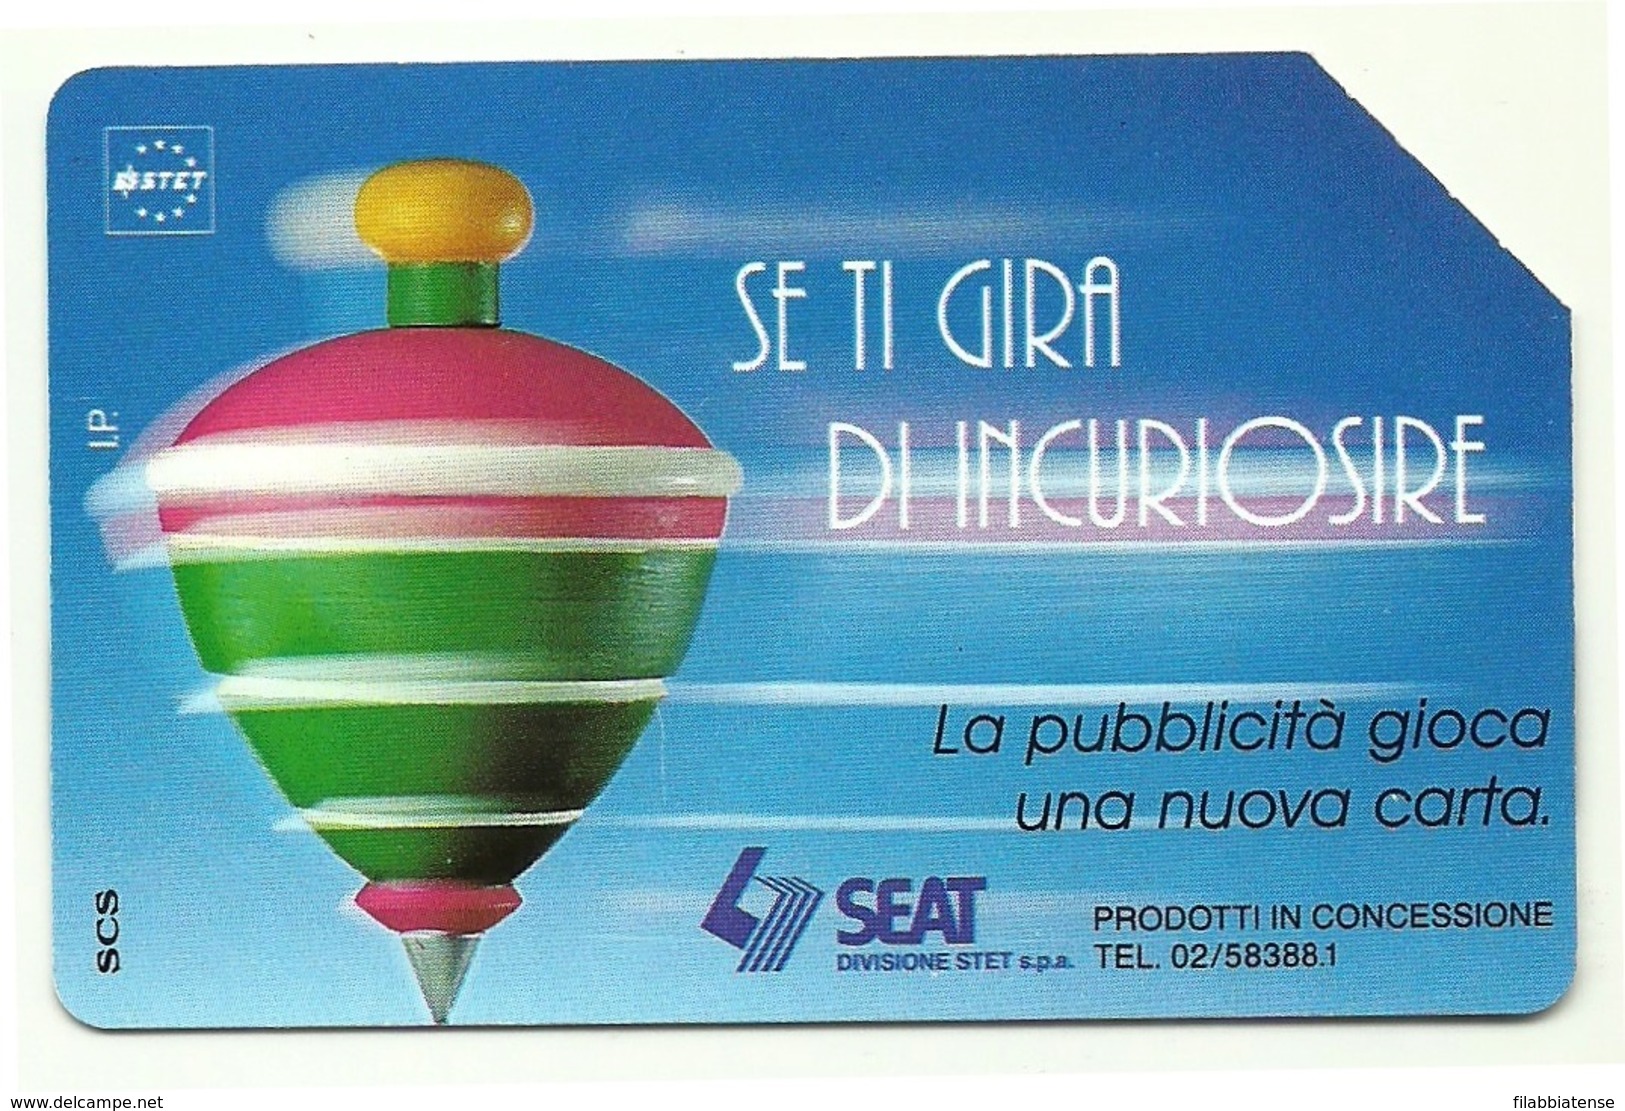 Italia - Tessera Telefonica Da 5.000 Lire N. 323 - Trottole - Se Ti Gira Di Incuriosire - Public Practical Advertising